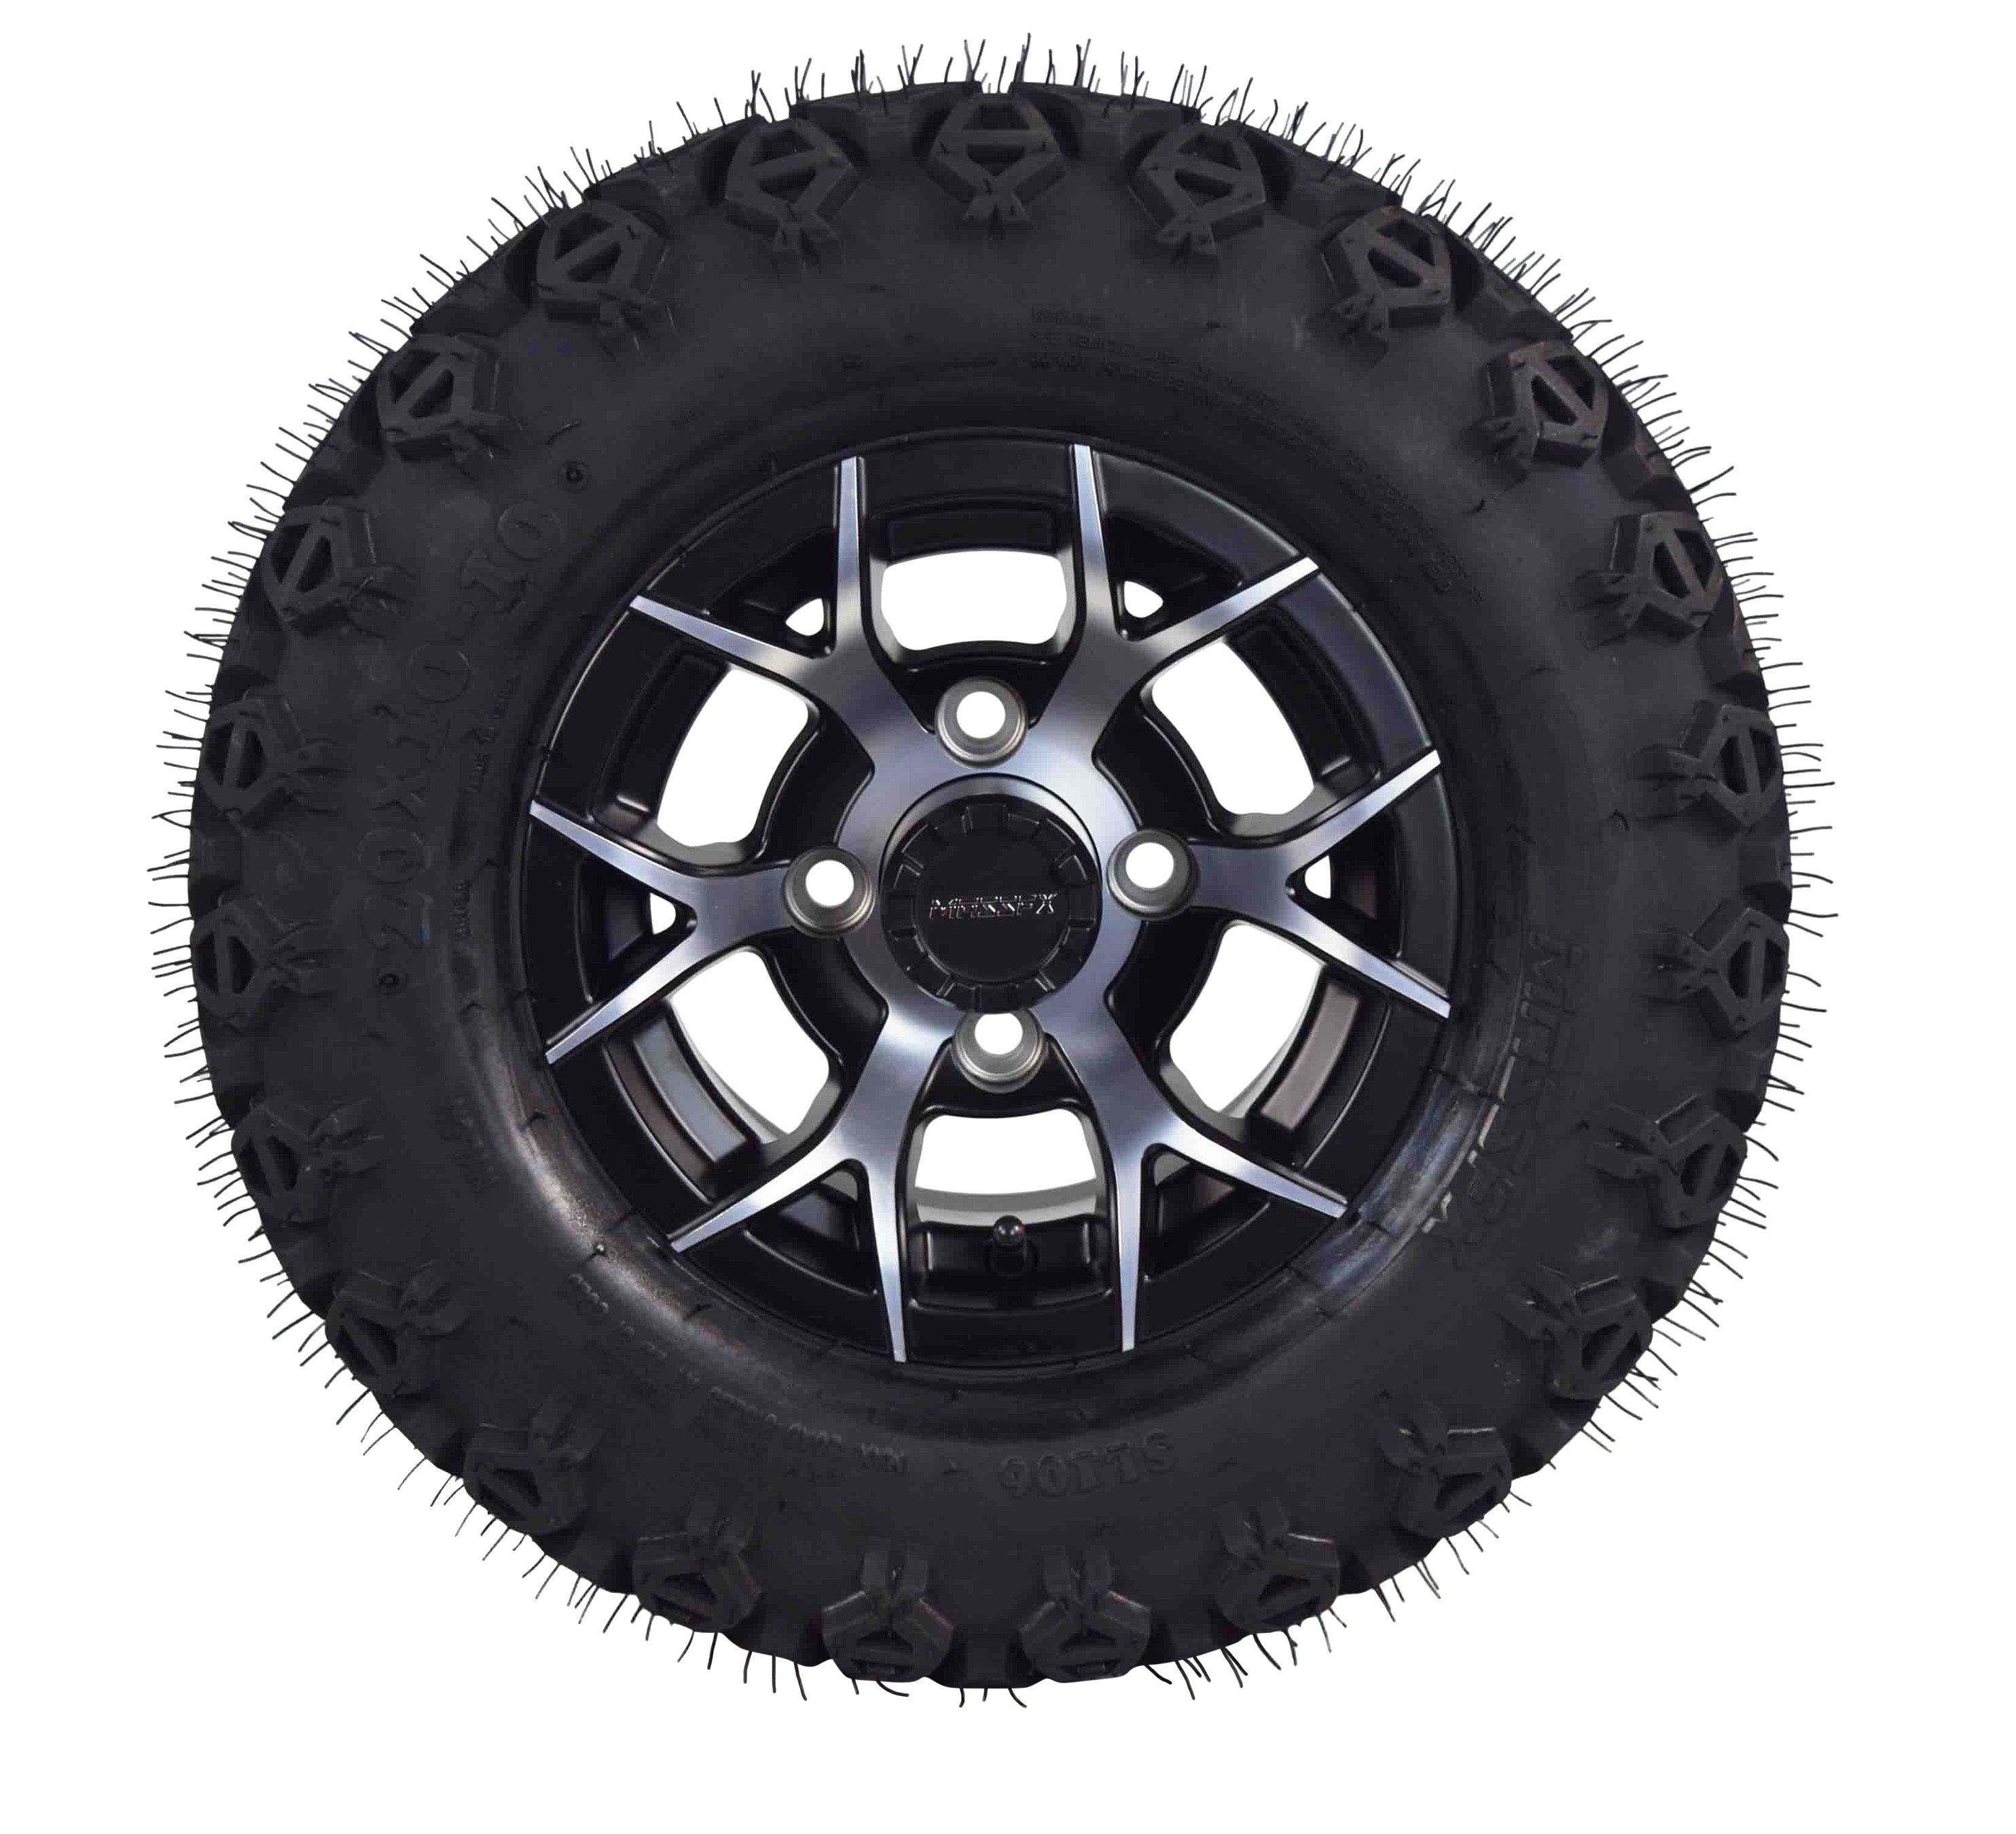 MASSFX-20x10-10-Tire-10x7-4-101.6-Black-Rim-Golf-Cart-Wheel-Tire-Combo-4-Pack-image-2